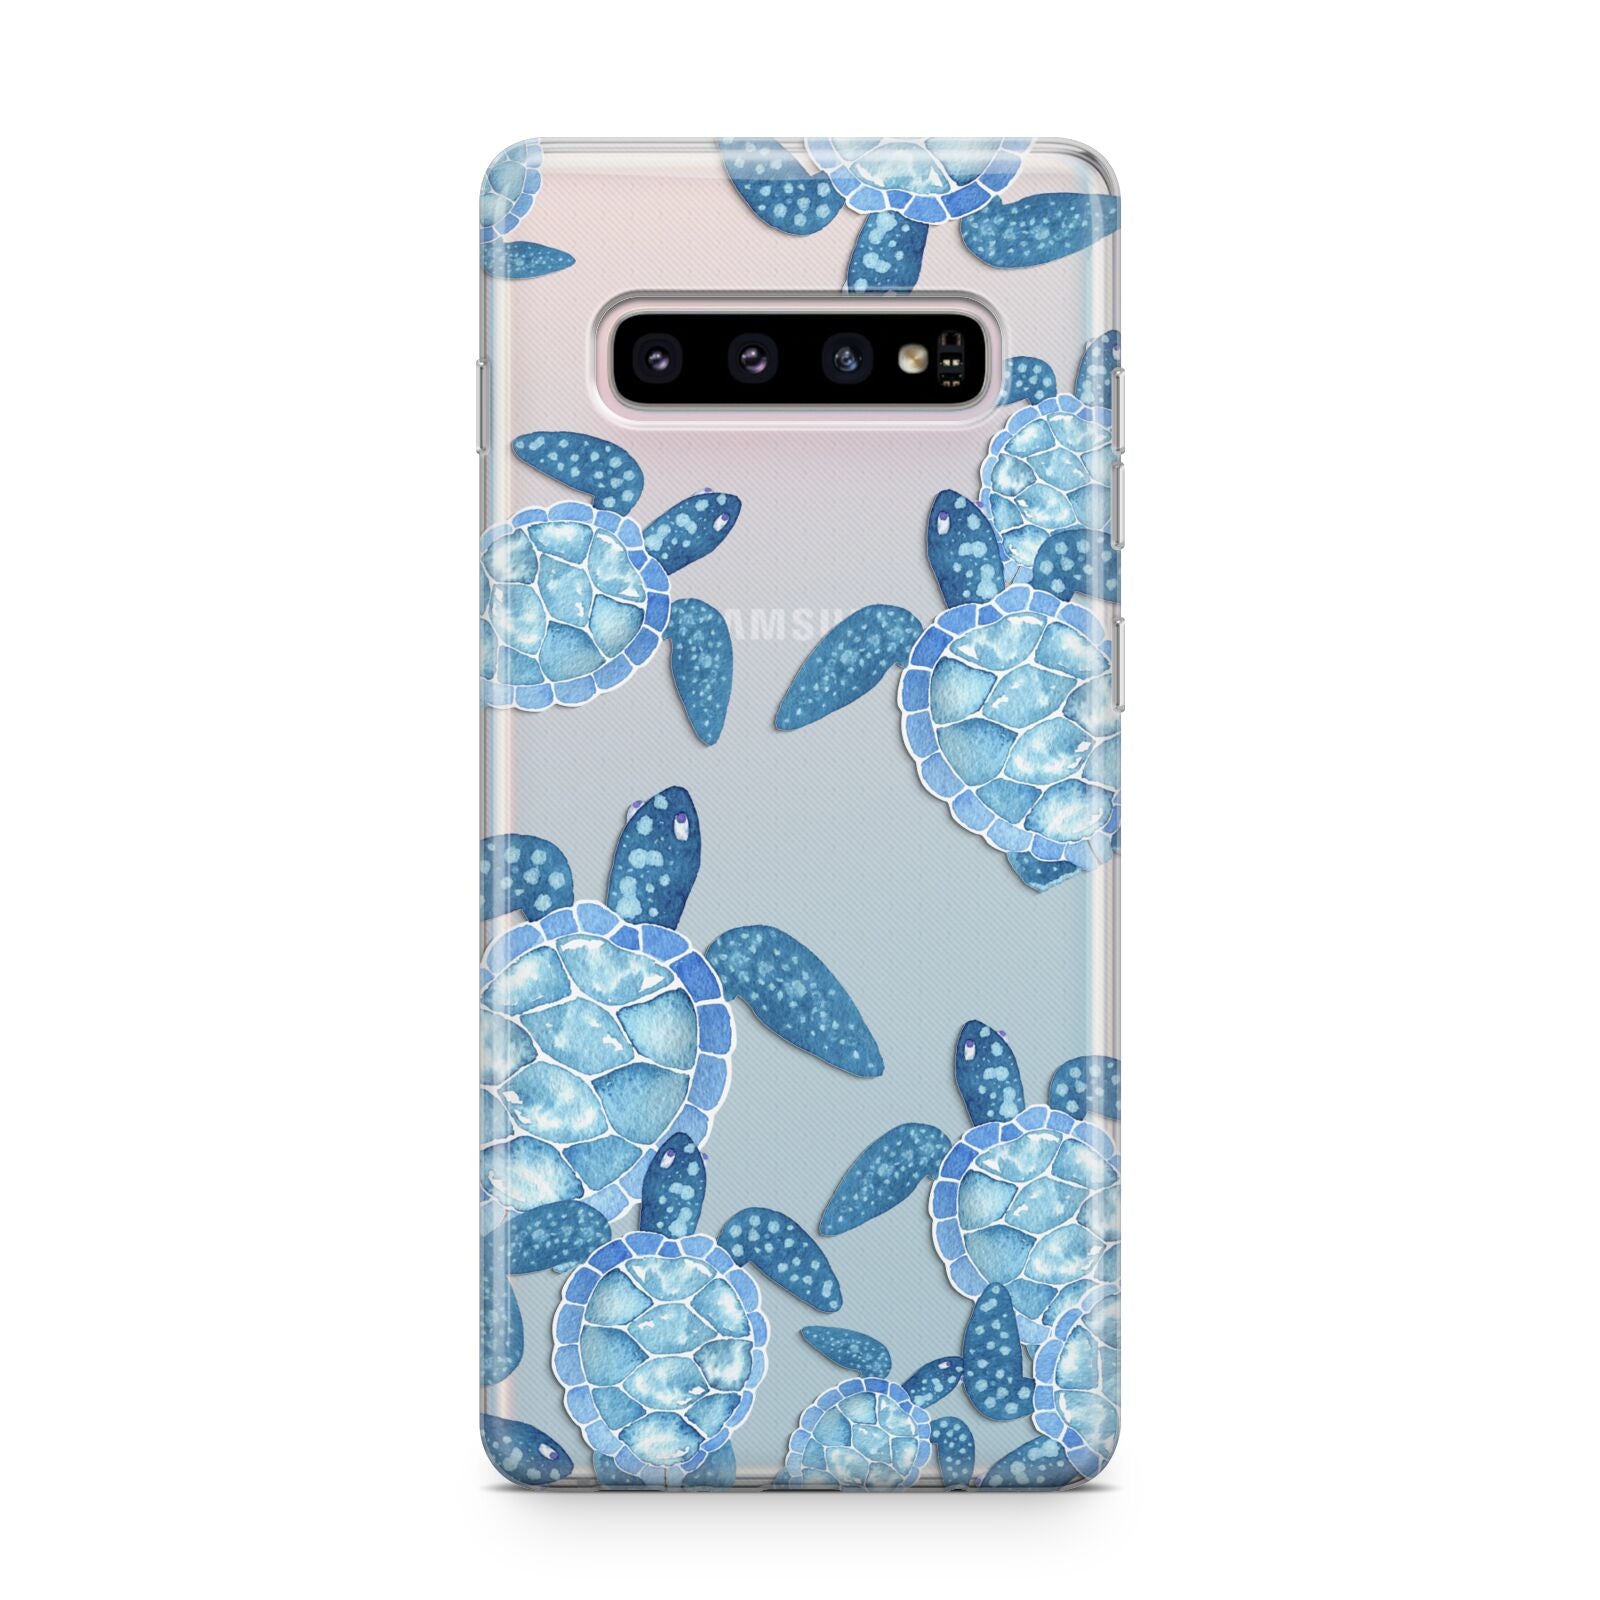 Turtle Samsung Galaxy S10 Plus Case